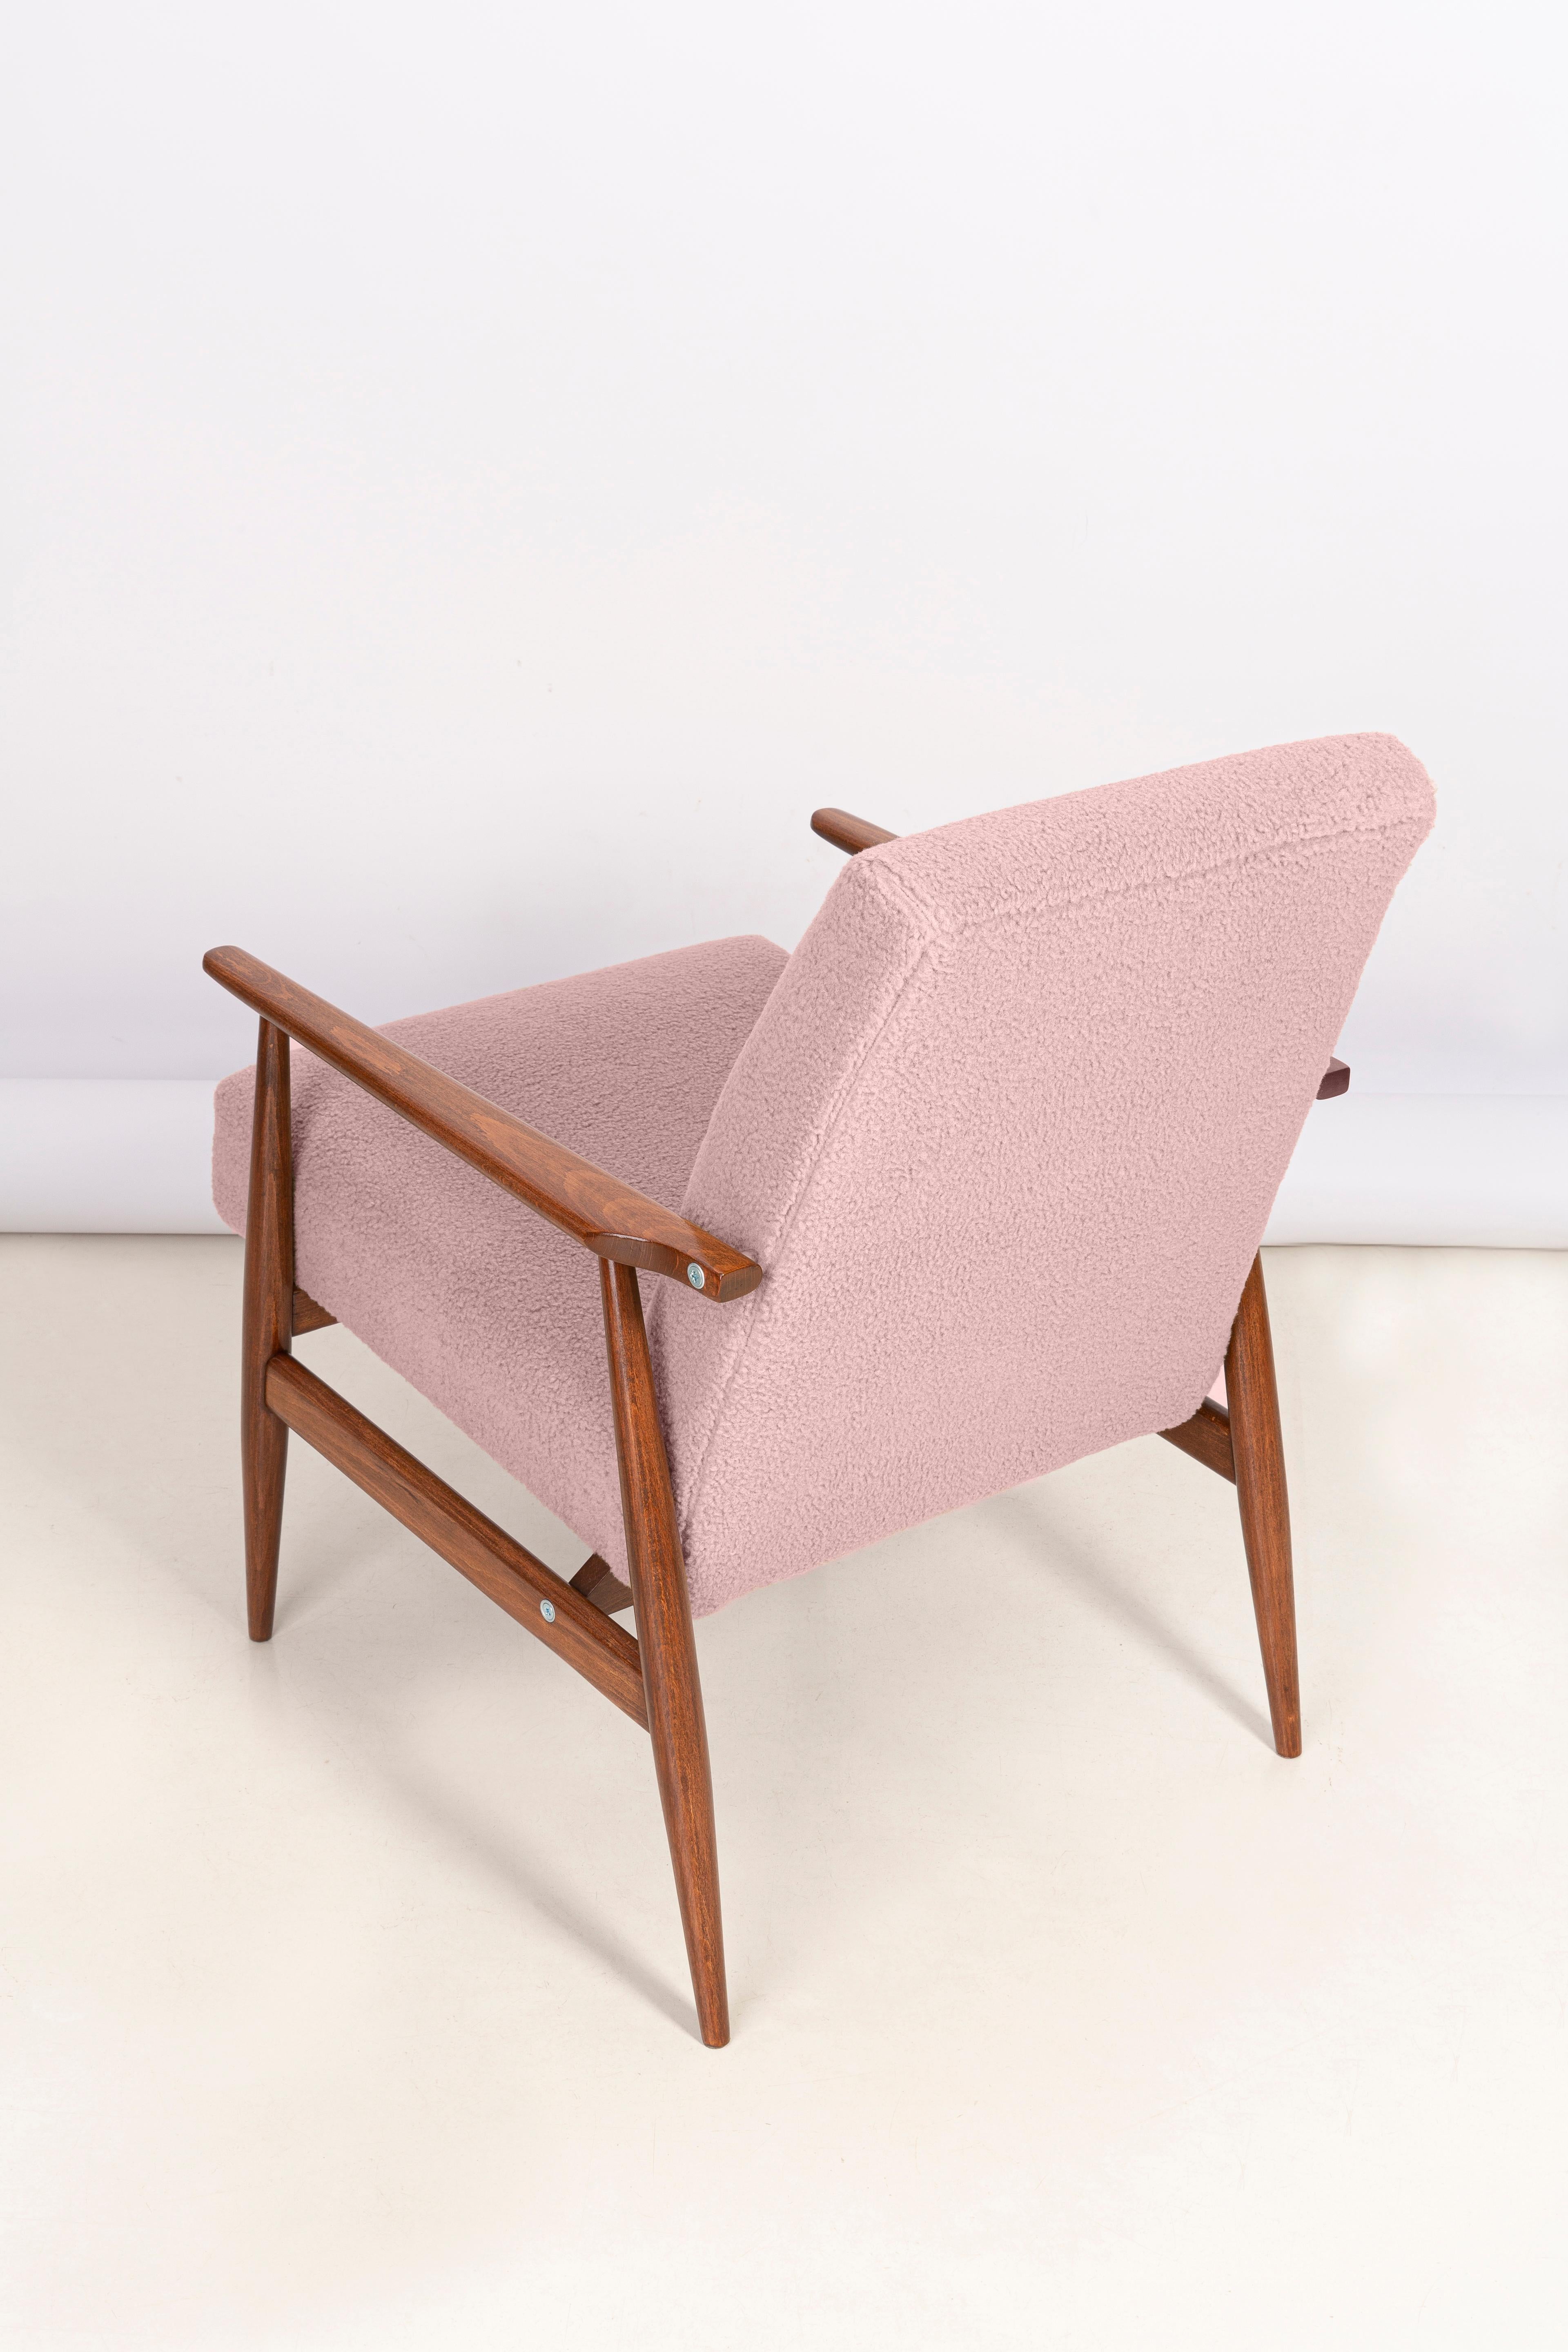 Dusty Pink Bouclé Dante Armchair, H. Lis, Europe, 1960s In Excellent Condition For Sale In 05-080 Hornowek, PL